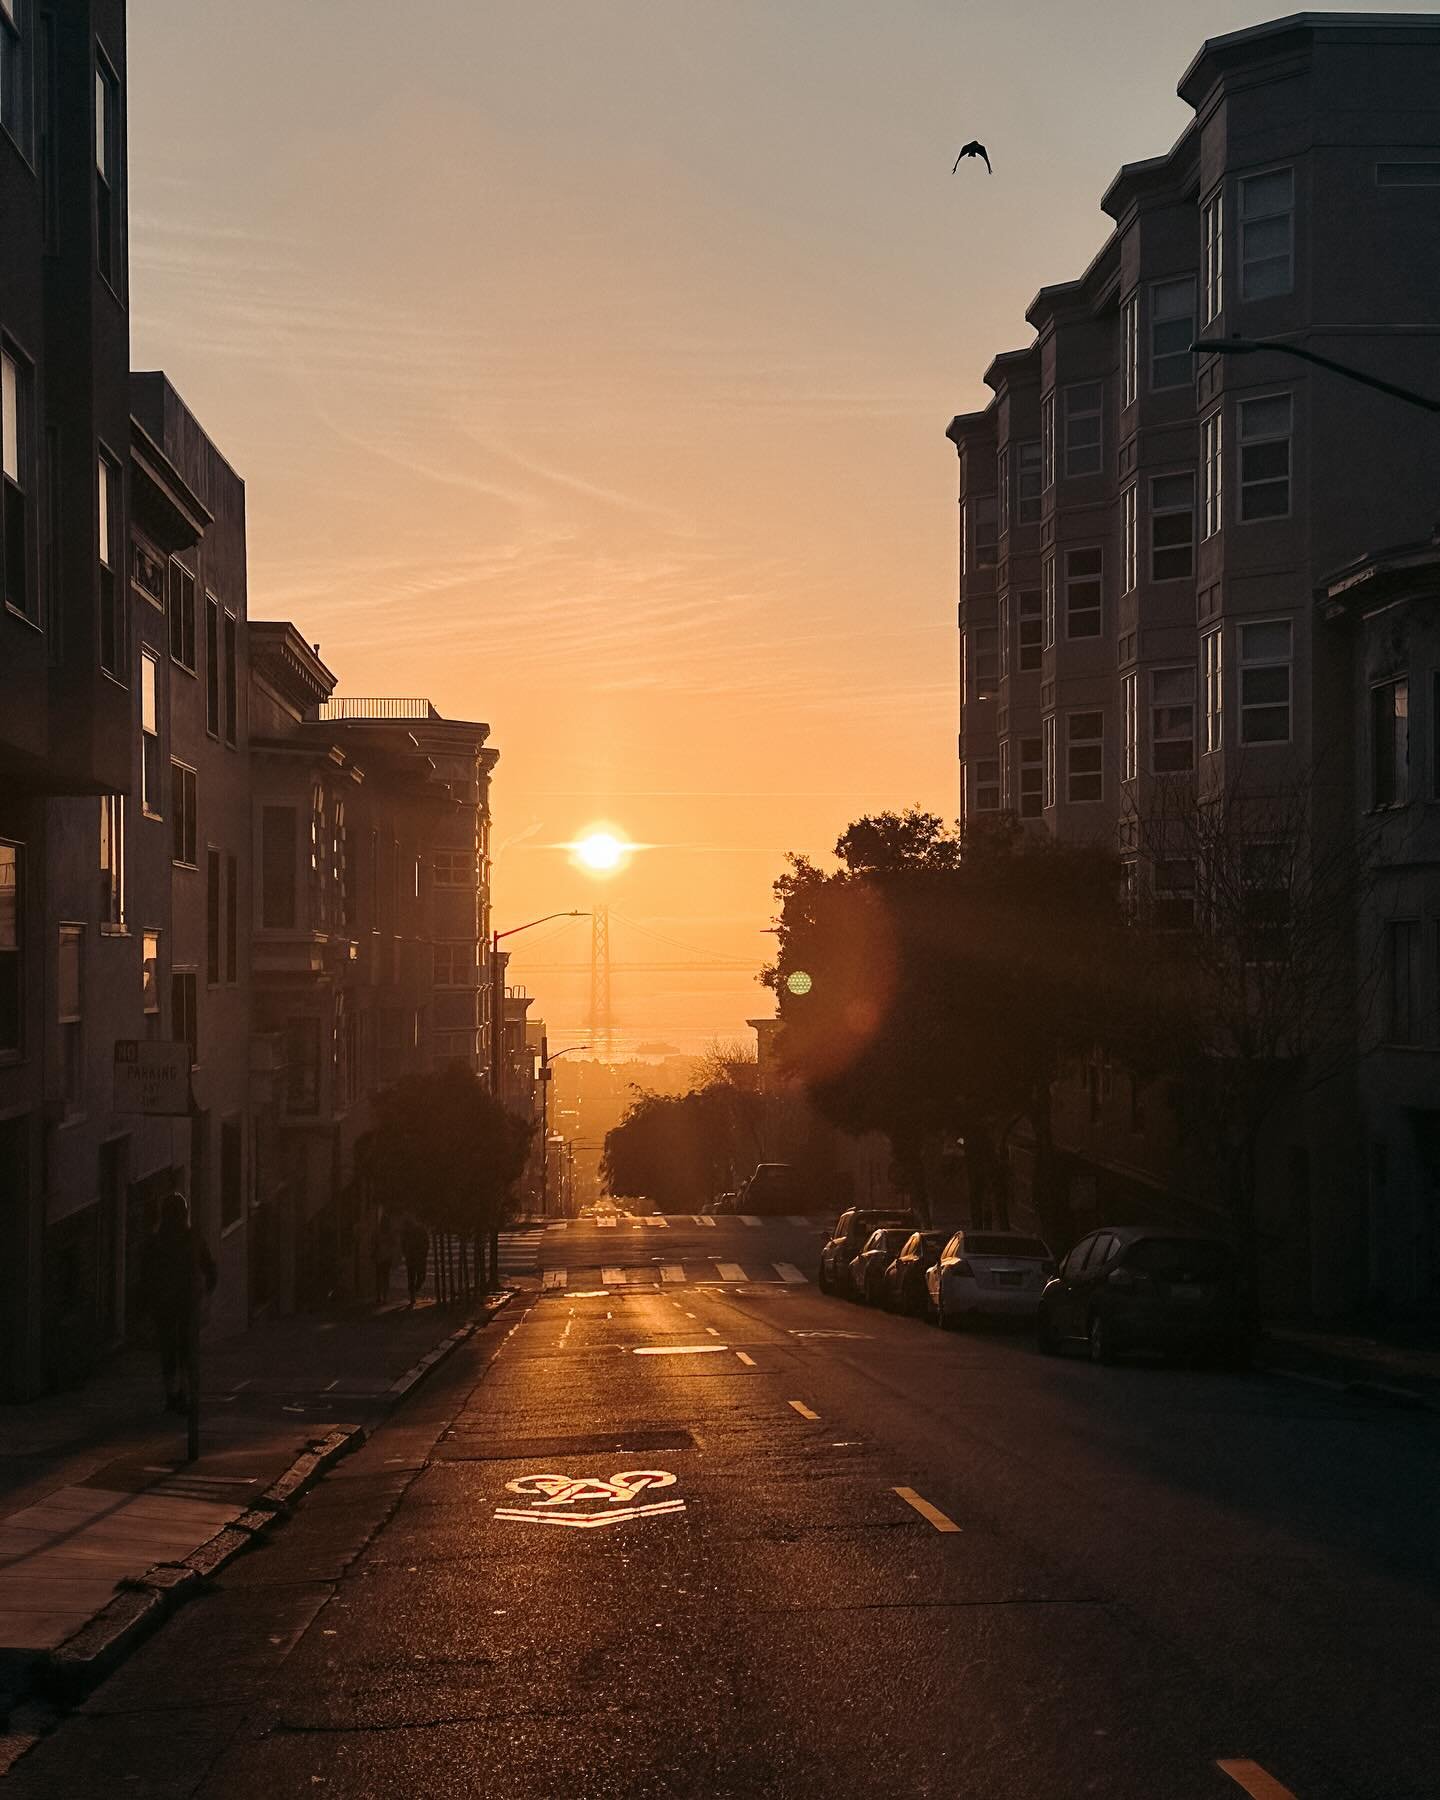 Sunrise strolls and embracing golden hour with every step. 🌅✨
.
.
.
.
#CocoinCalifornia #NationalCocoGraphic #ilovemycity #bayareabuzz #dametraveler #VisitCalifornia #OnlySF #onlyinsf  #sanfranciscobay #sanfranciscoworld #SanFranciscoSunrise #Mornin